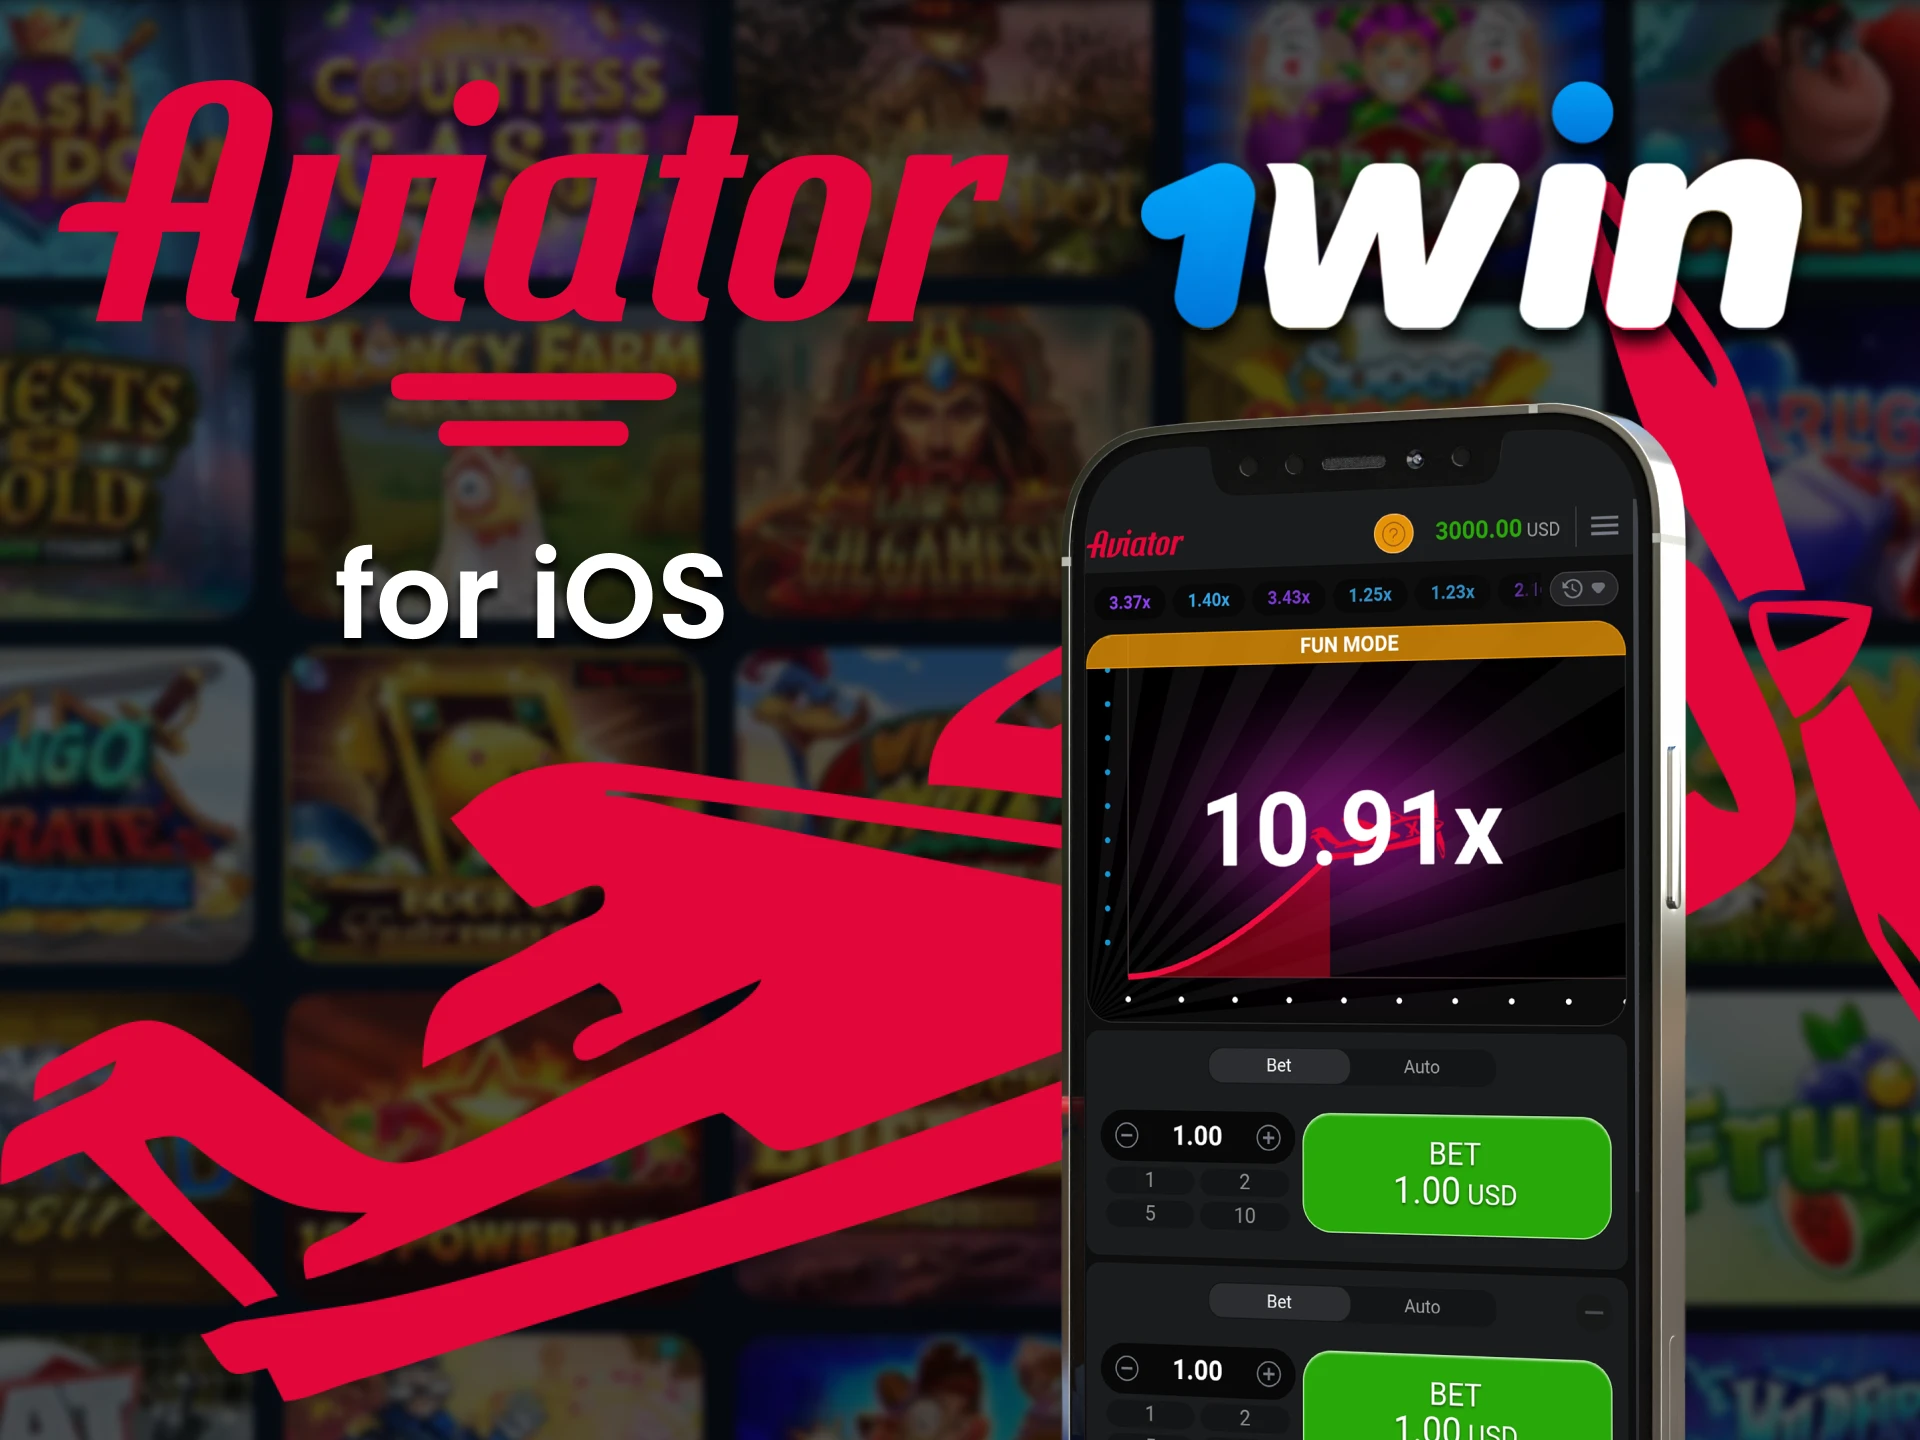 Play Aviator through the 1win app on iOS devices.